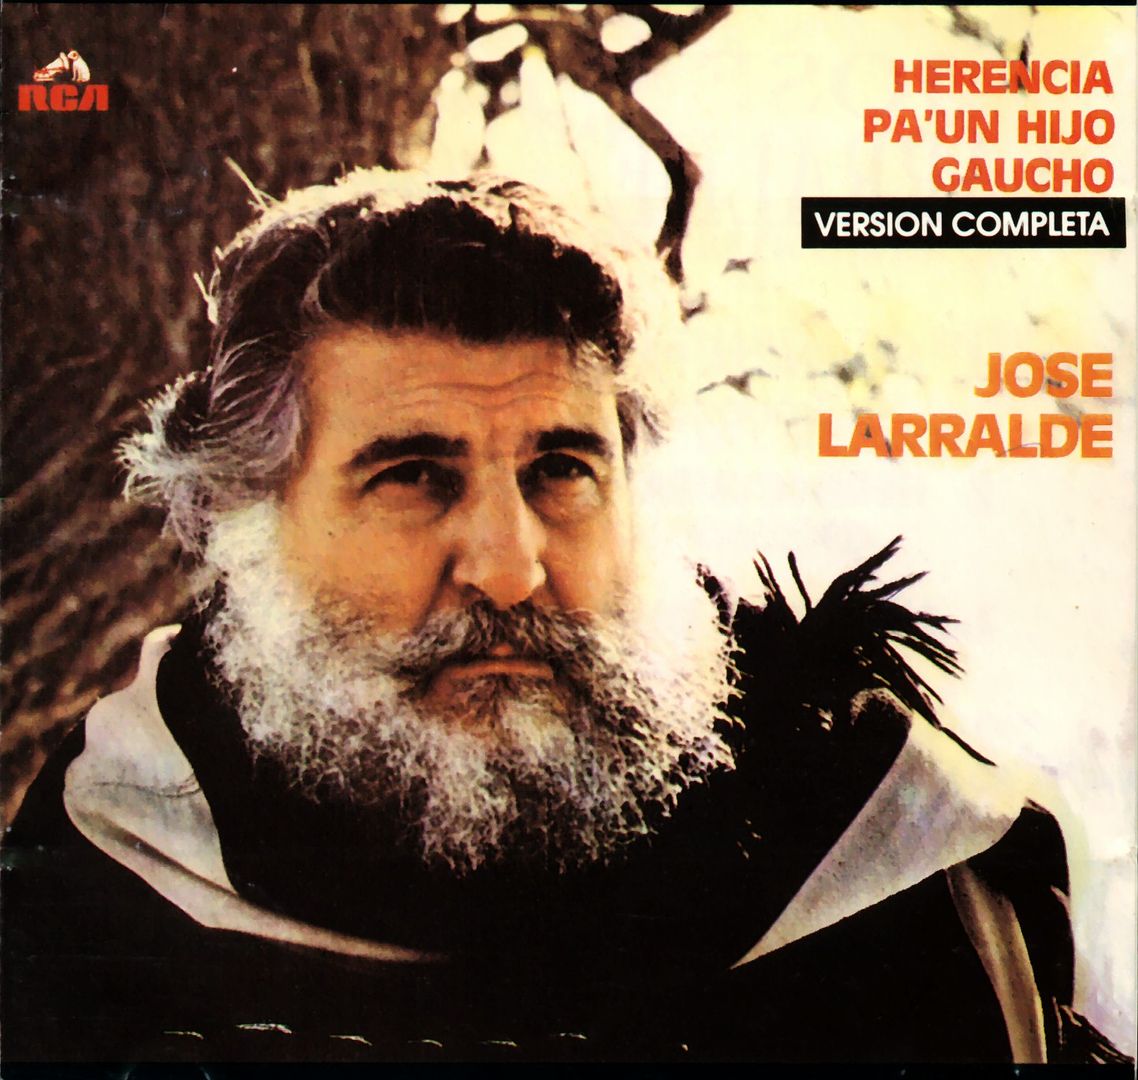 ose Larralde Herencia Pa  Un Hijo Gaucho frontal - José Larralde - Herencia pa' un Hijo Gaucho (1994) MP3